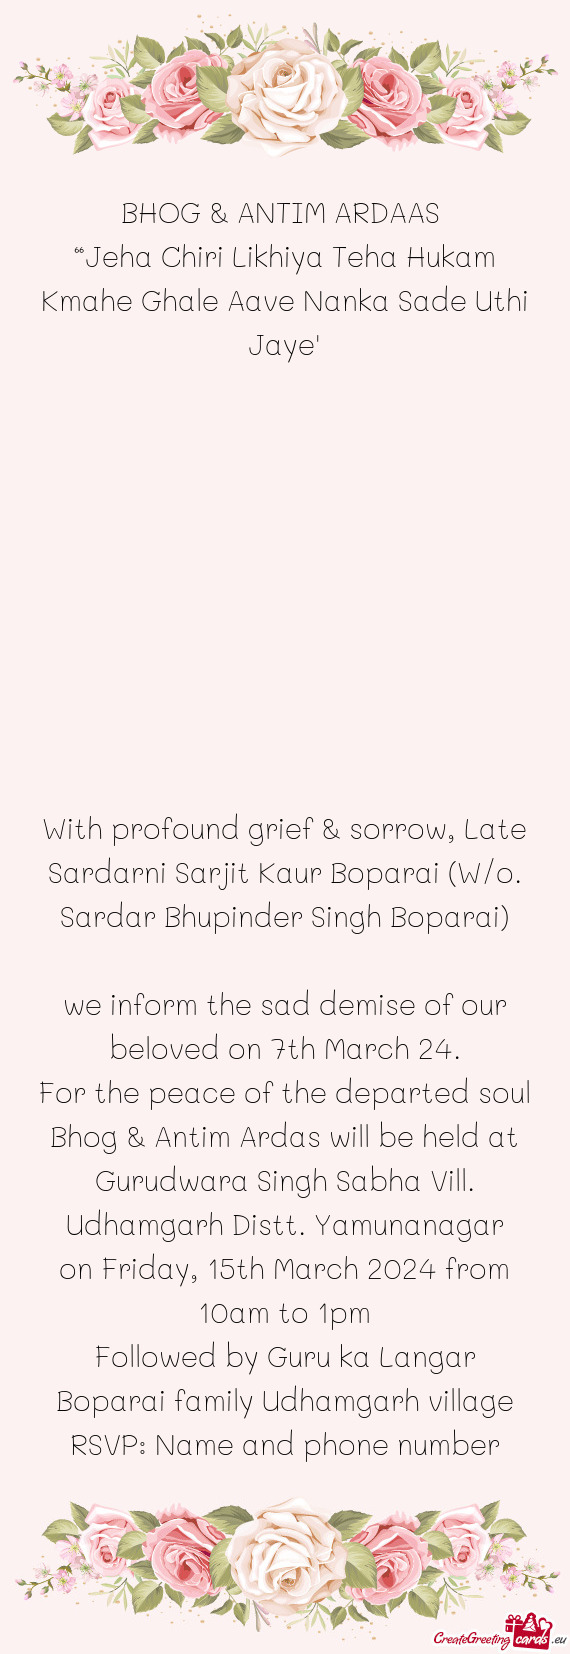 With profound grief & sorrow, Late Sardarni Sarjit Kaur Boparai (W/o. Sardar Bhupinder Singh Boparai